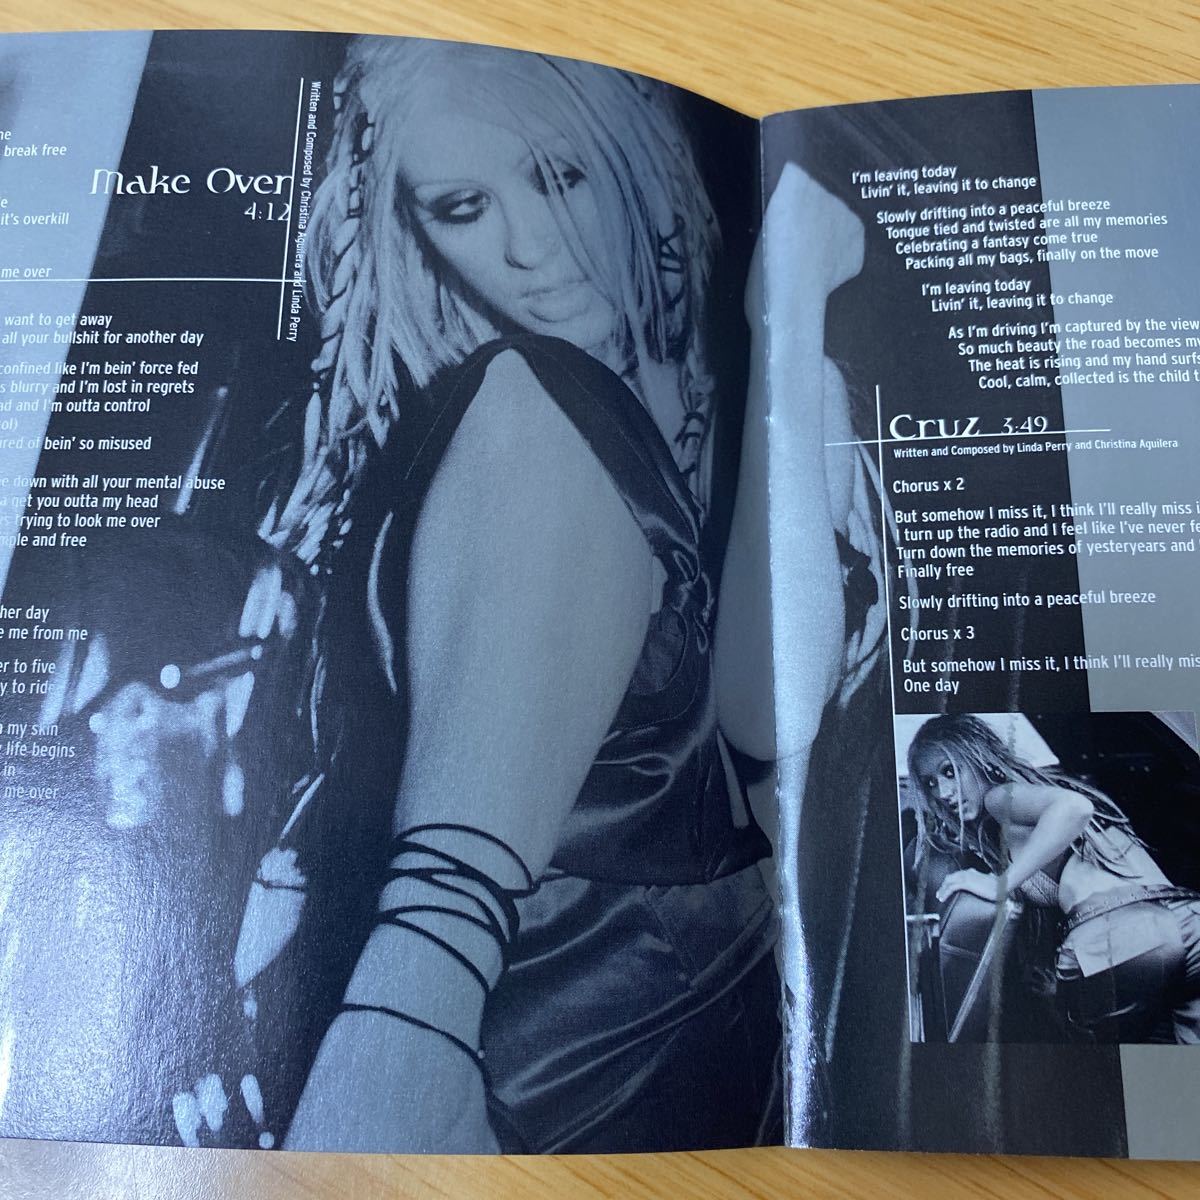 [ прекрасный товар ]CD Christina Aguilera / Stripped